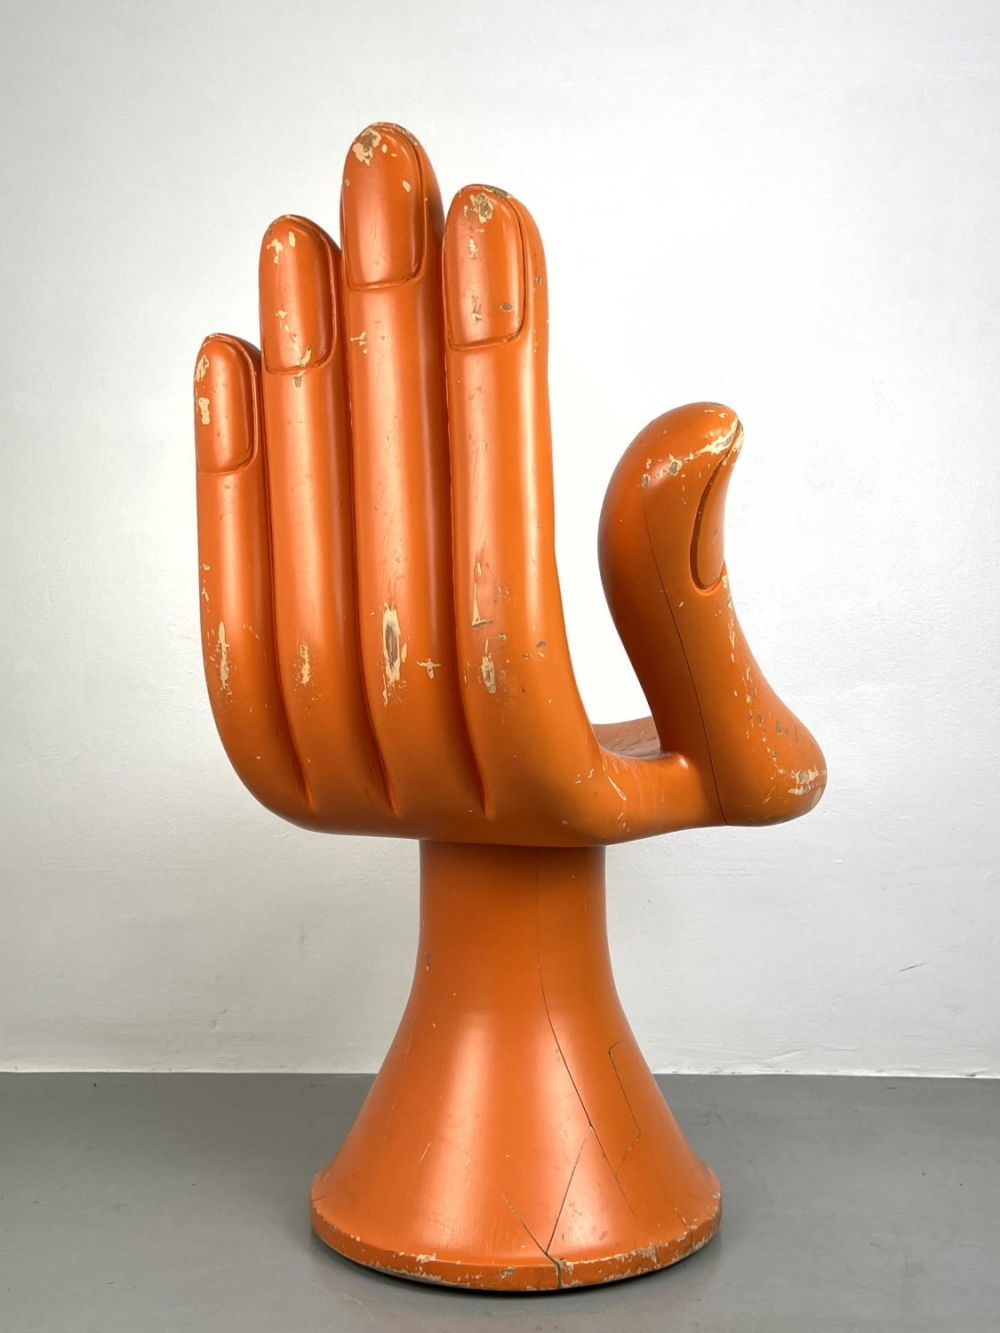 Pedro Friedeberg, Hand chair (1960s)